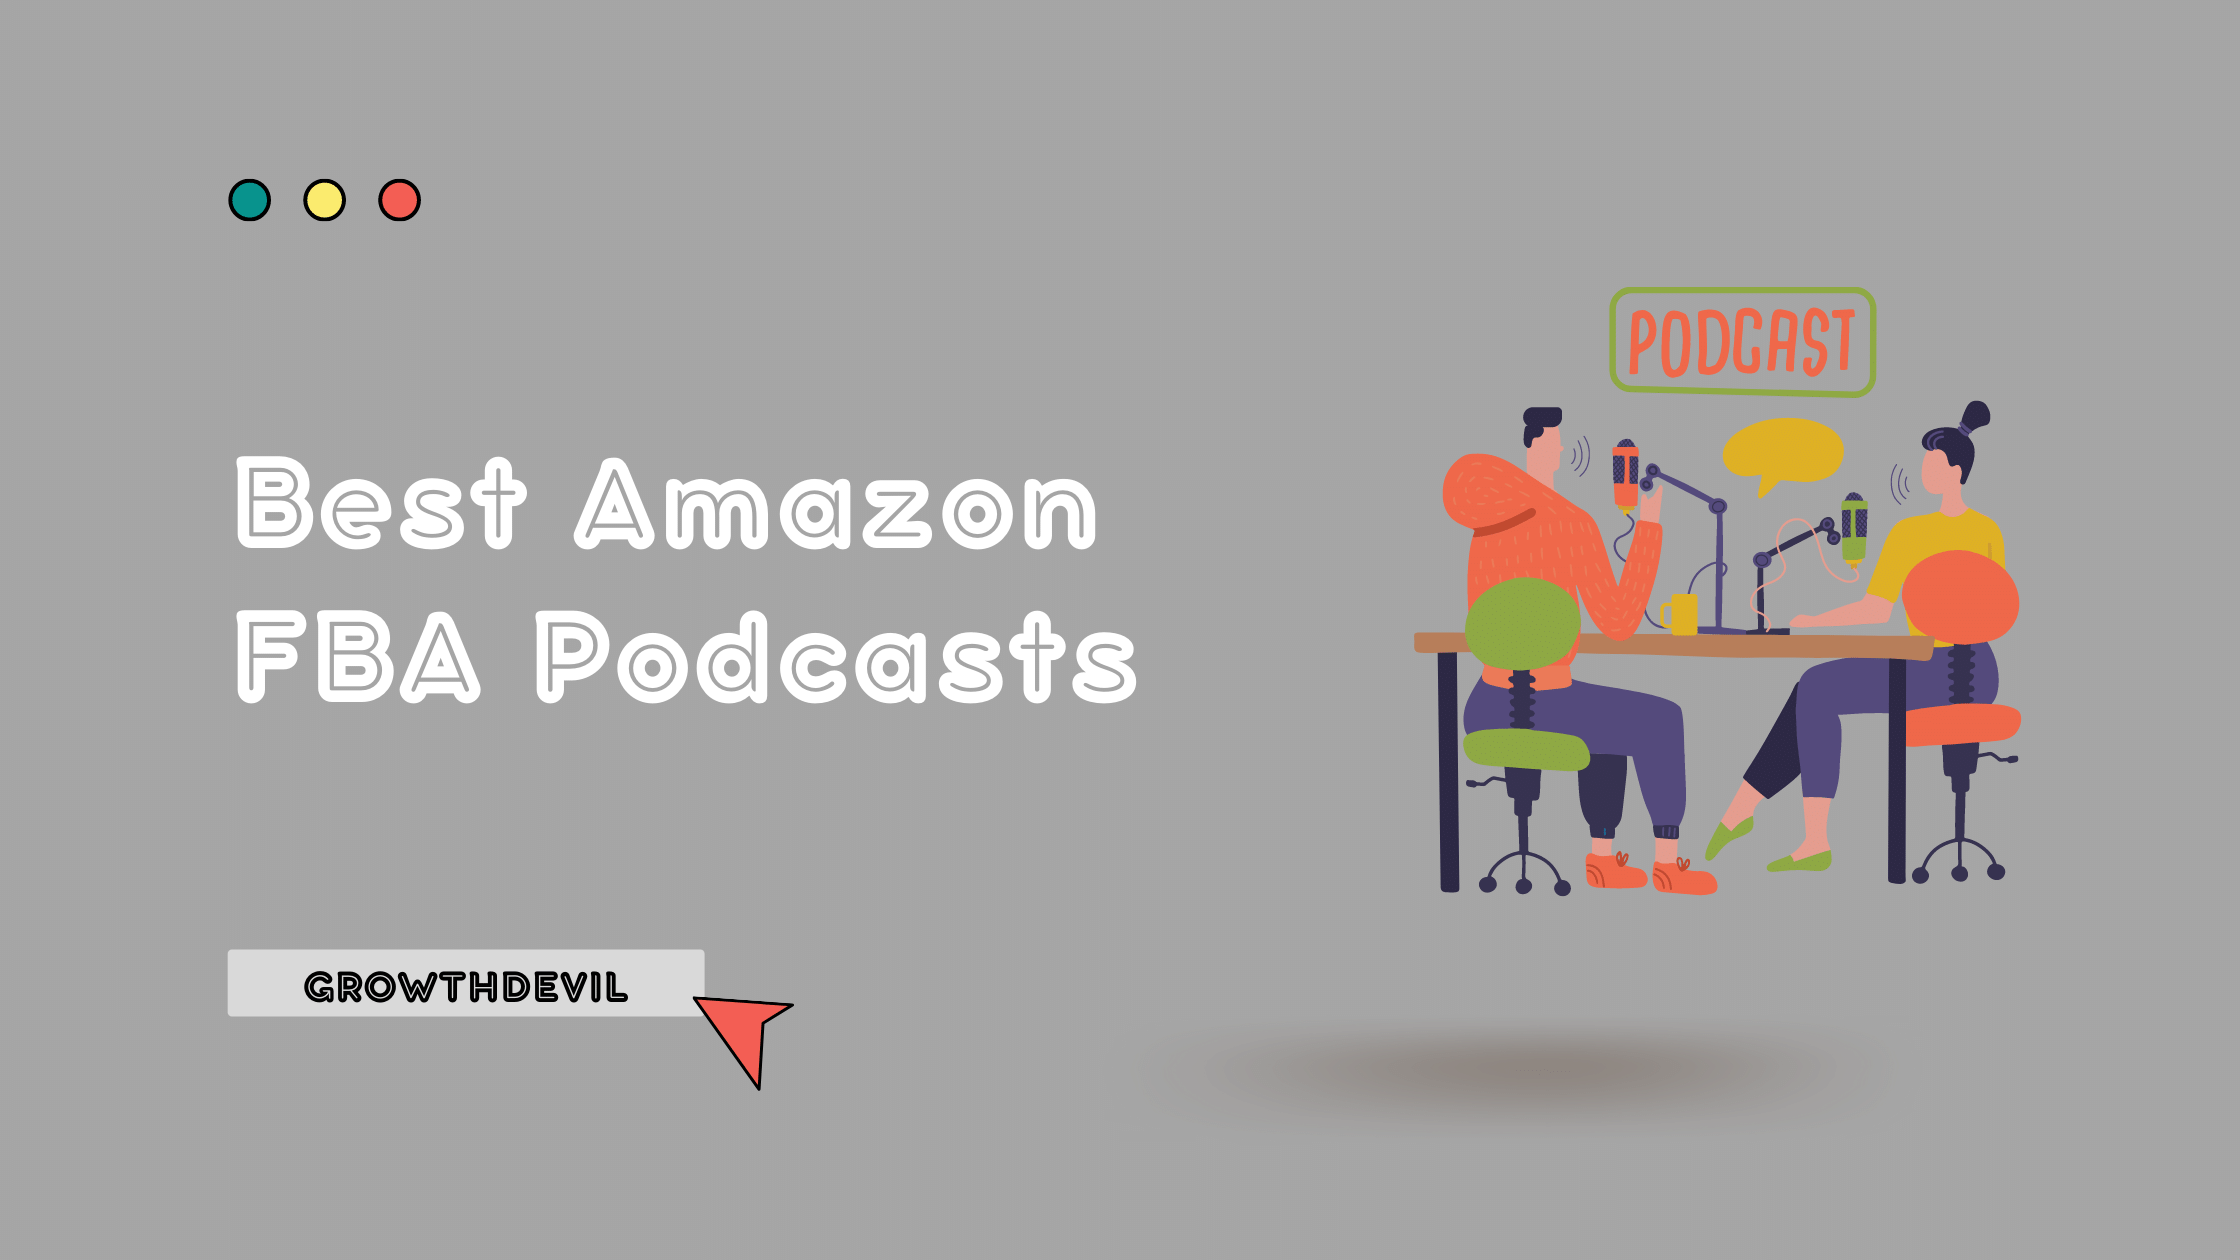 Best Amazon FBA Podcasts - GrowthDevil